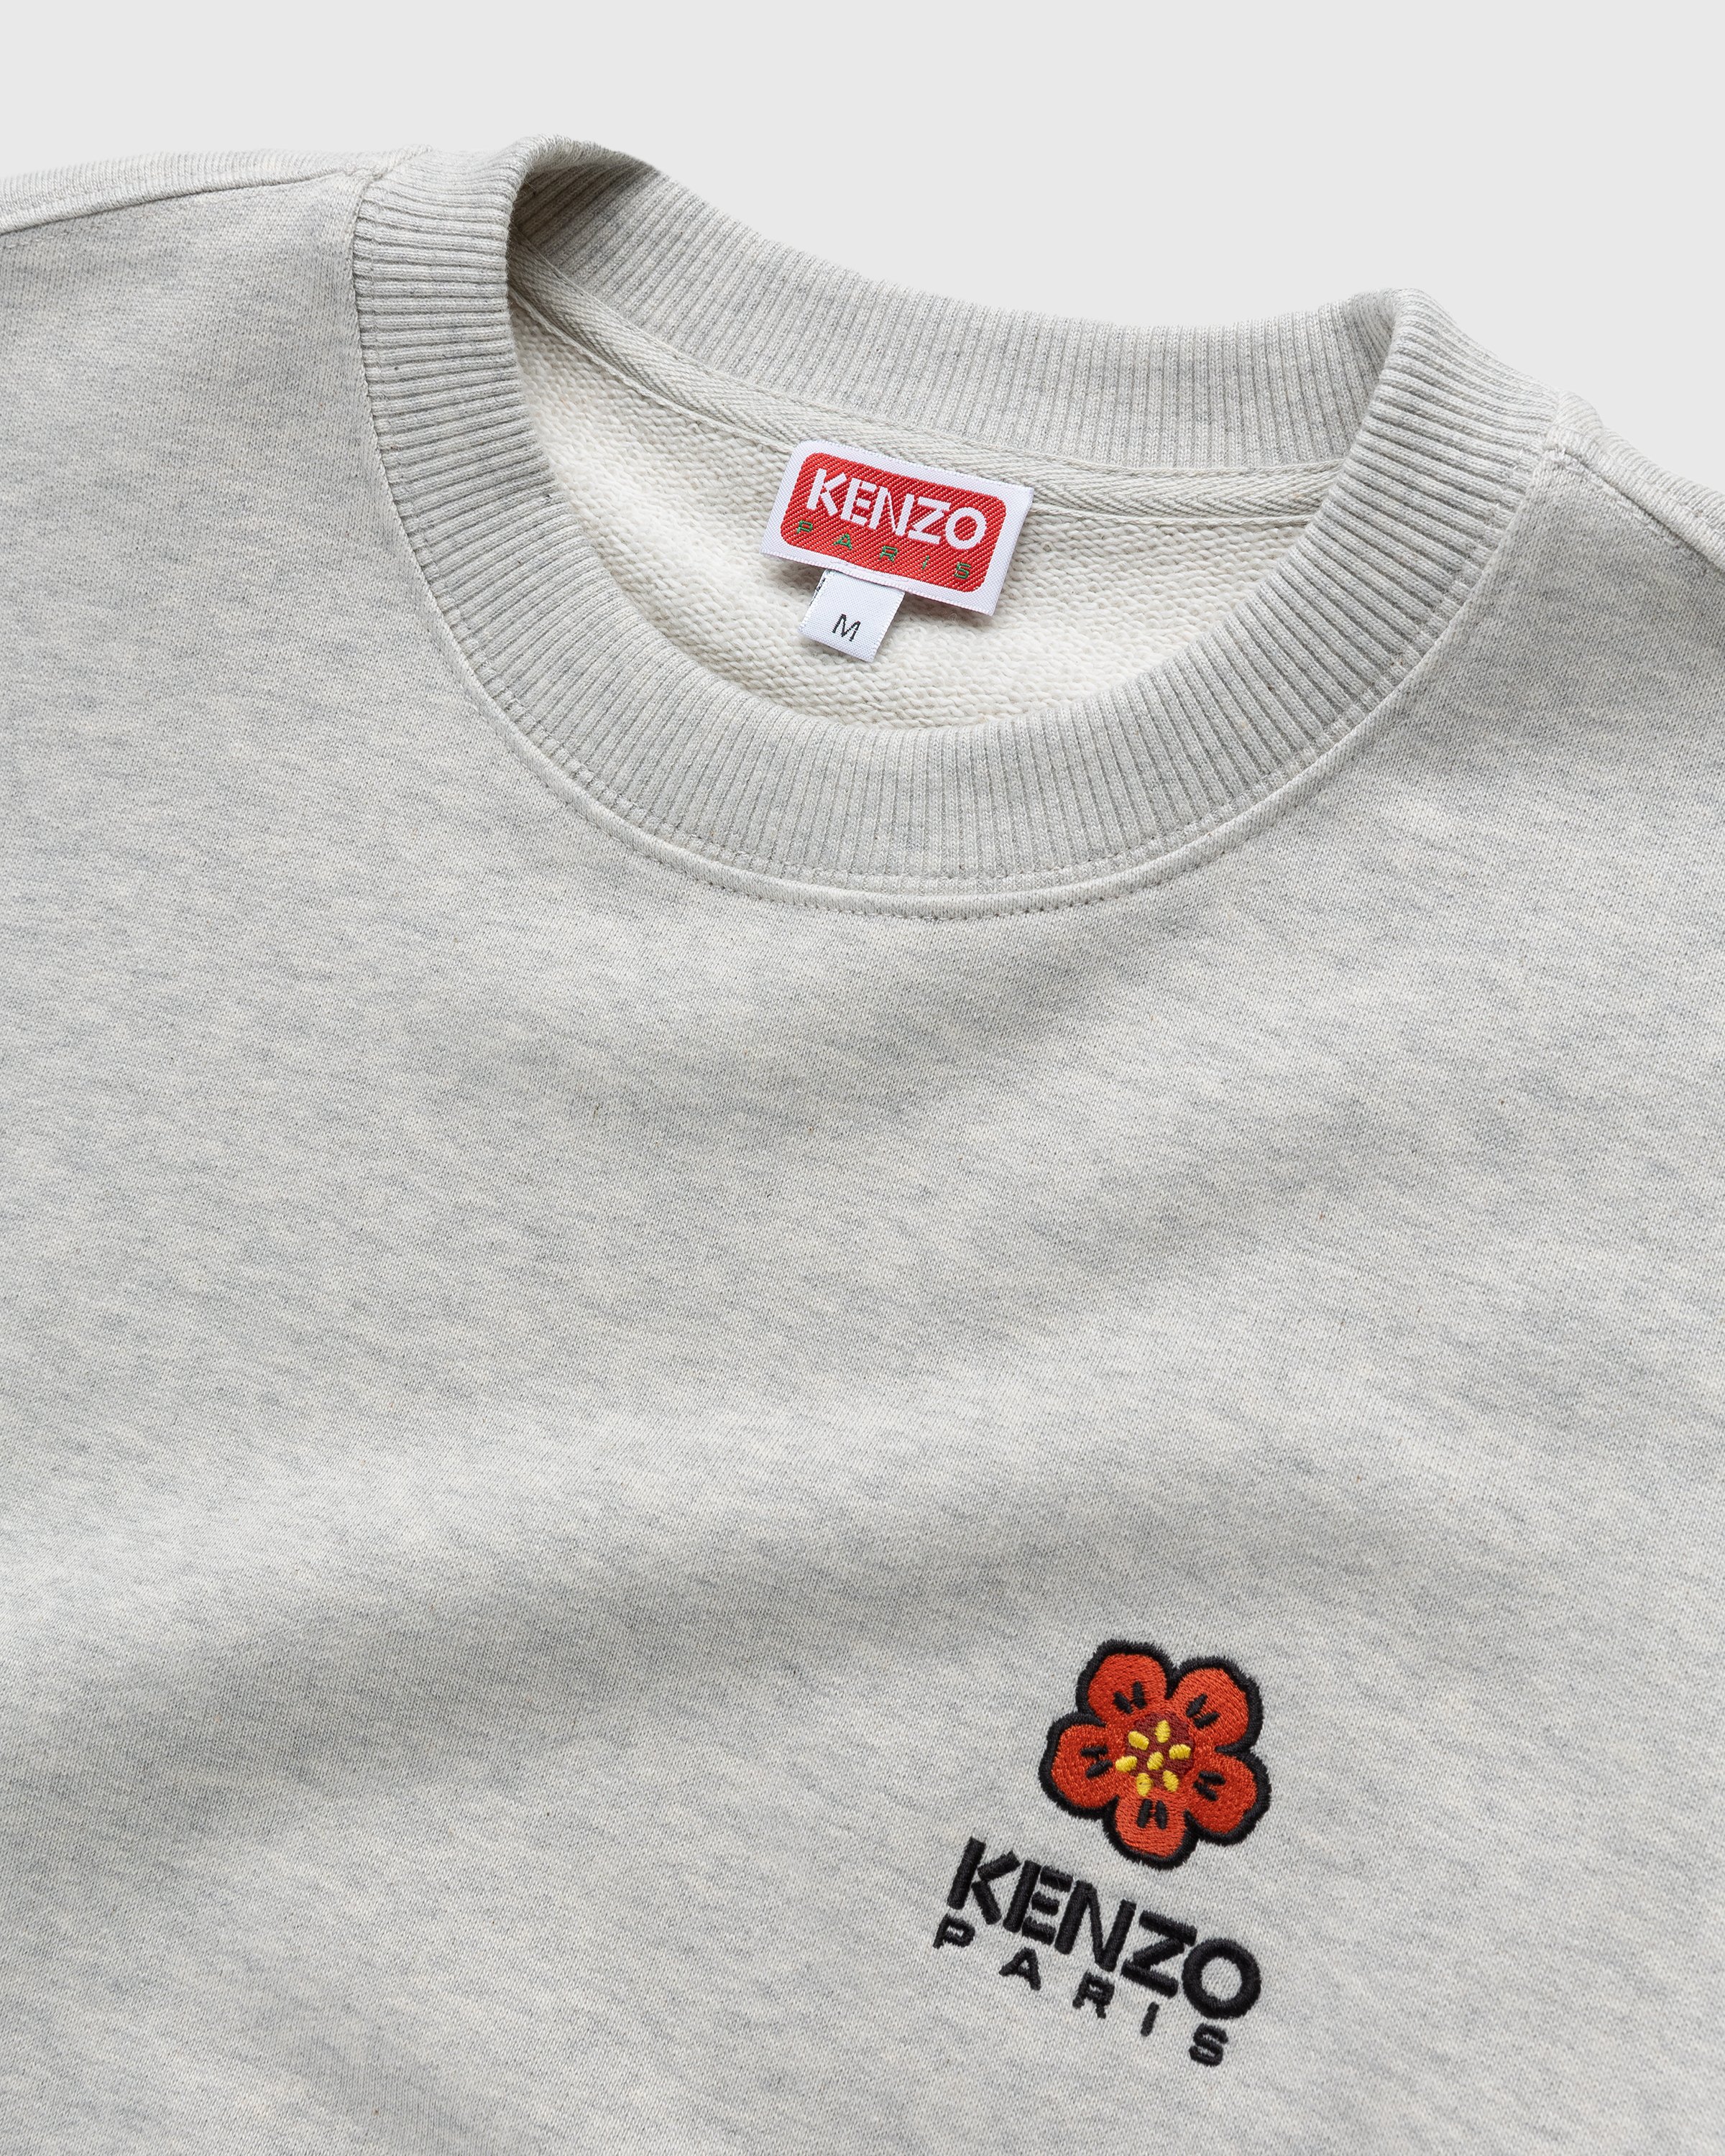 Kenzo - Boke Flower Crest Sweatshirt Pale Grey - Clothing - Grey - Image 3